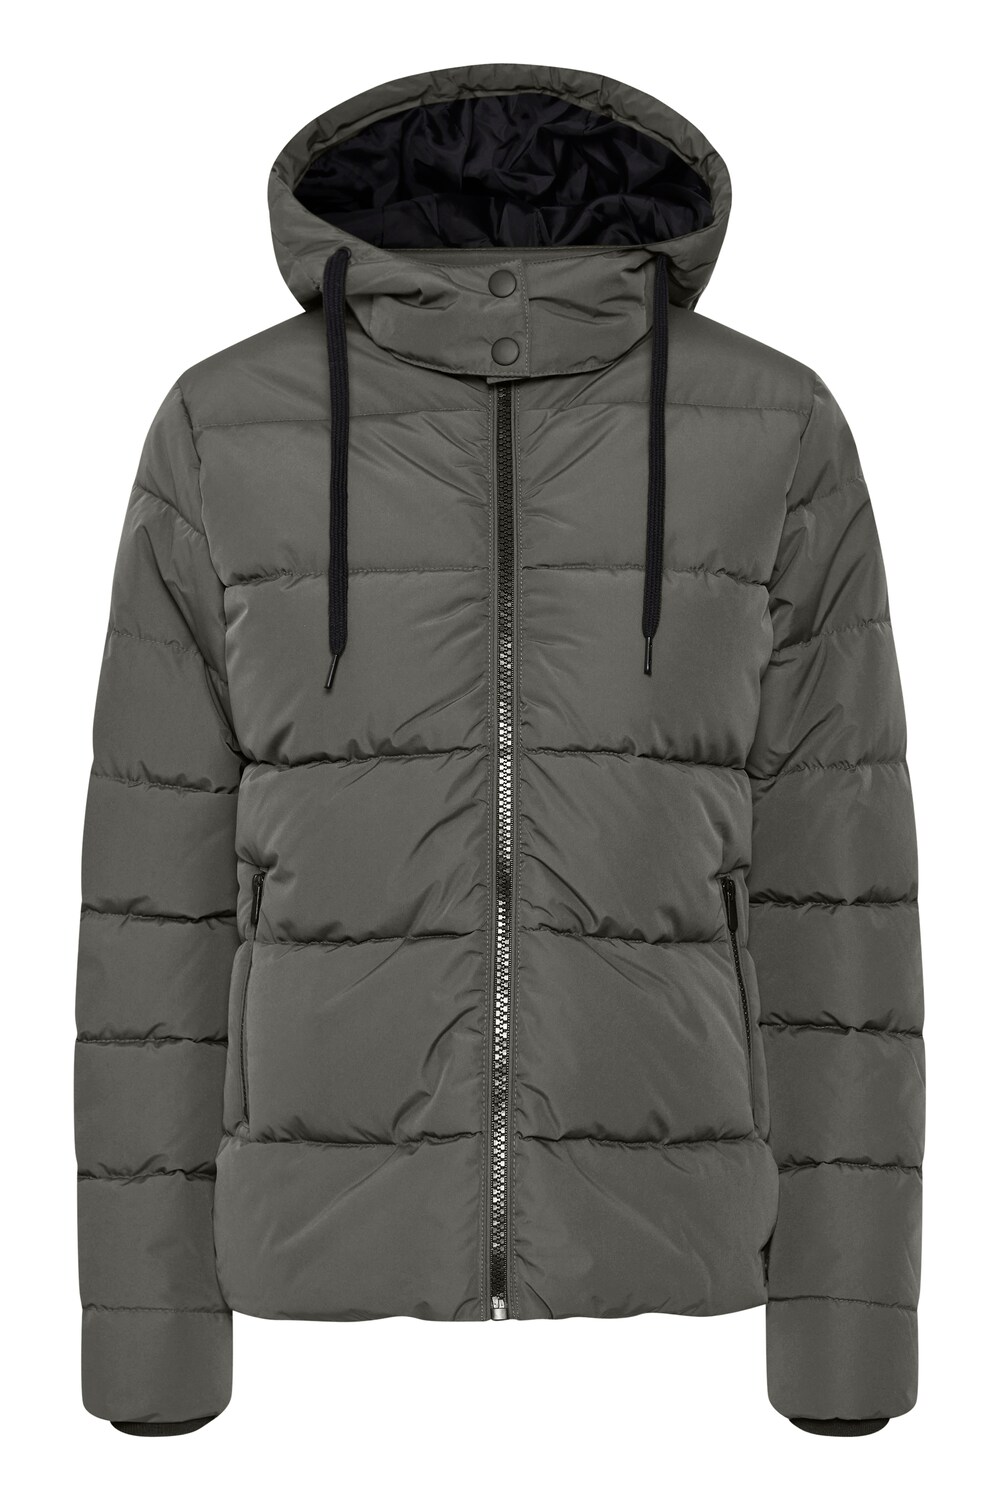 Зимняя куртка Oxmo Sofina, серый/серебристо-серый